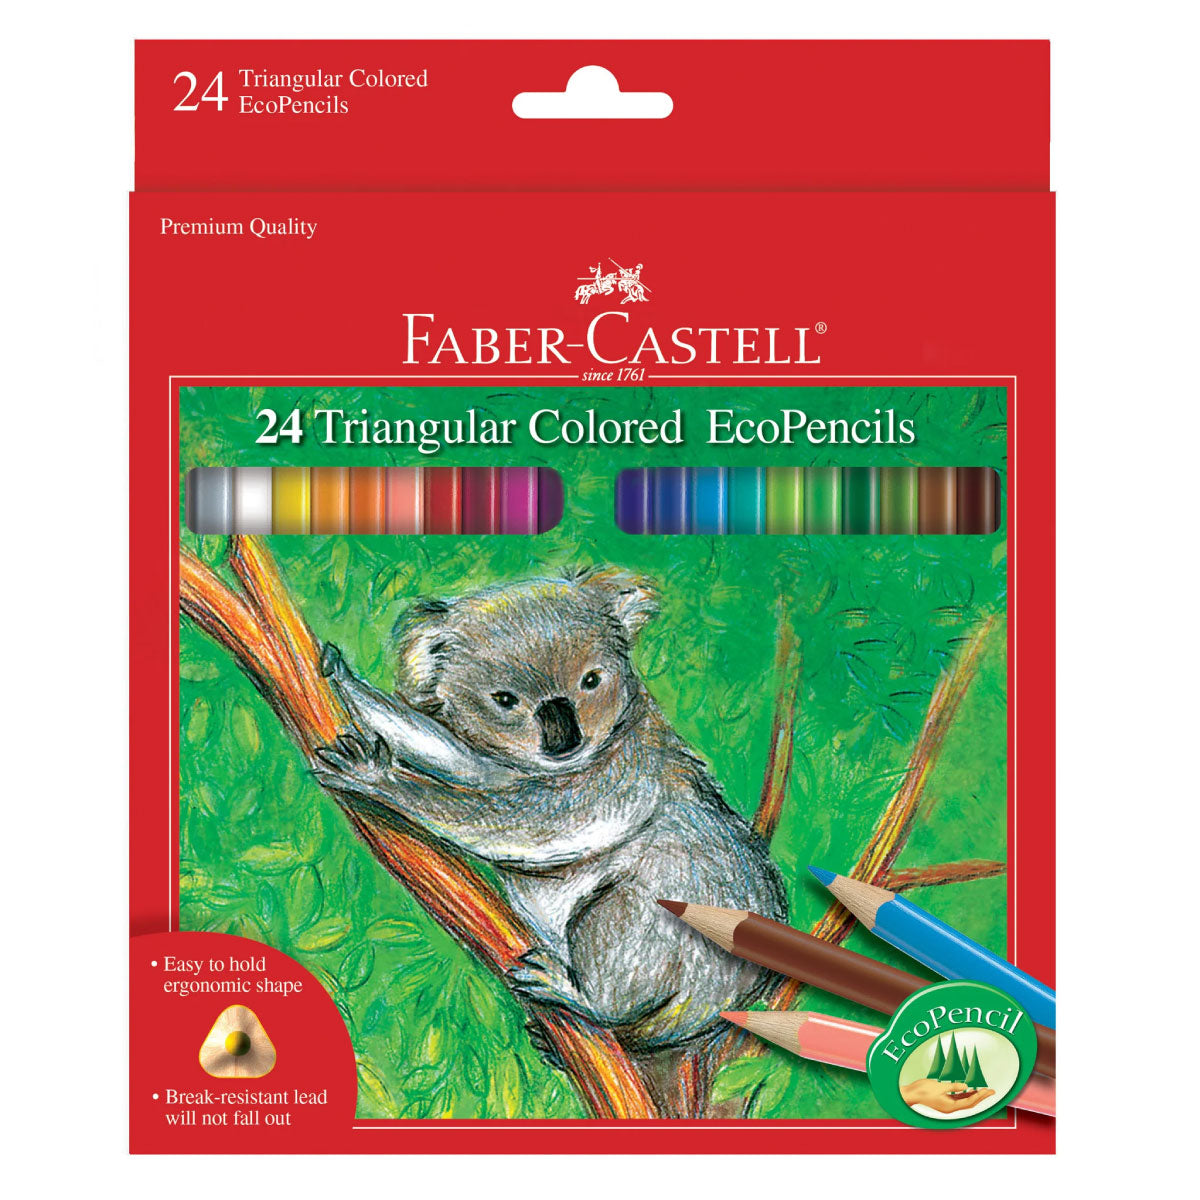 Faber Castell EcoPencils Colored Pencils 24 pencils